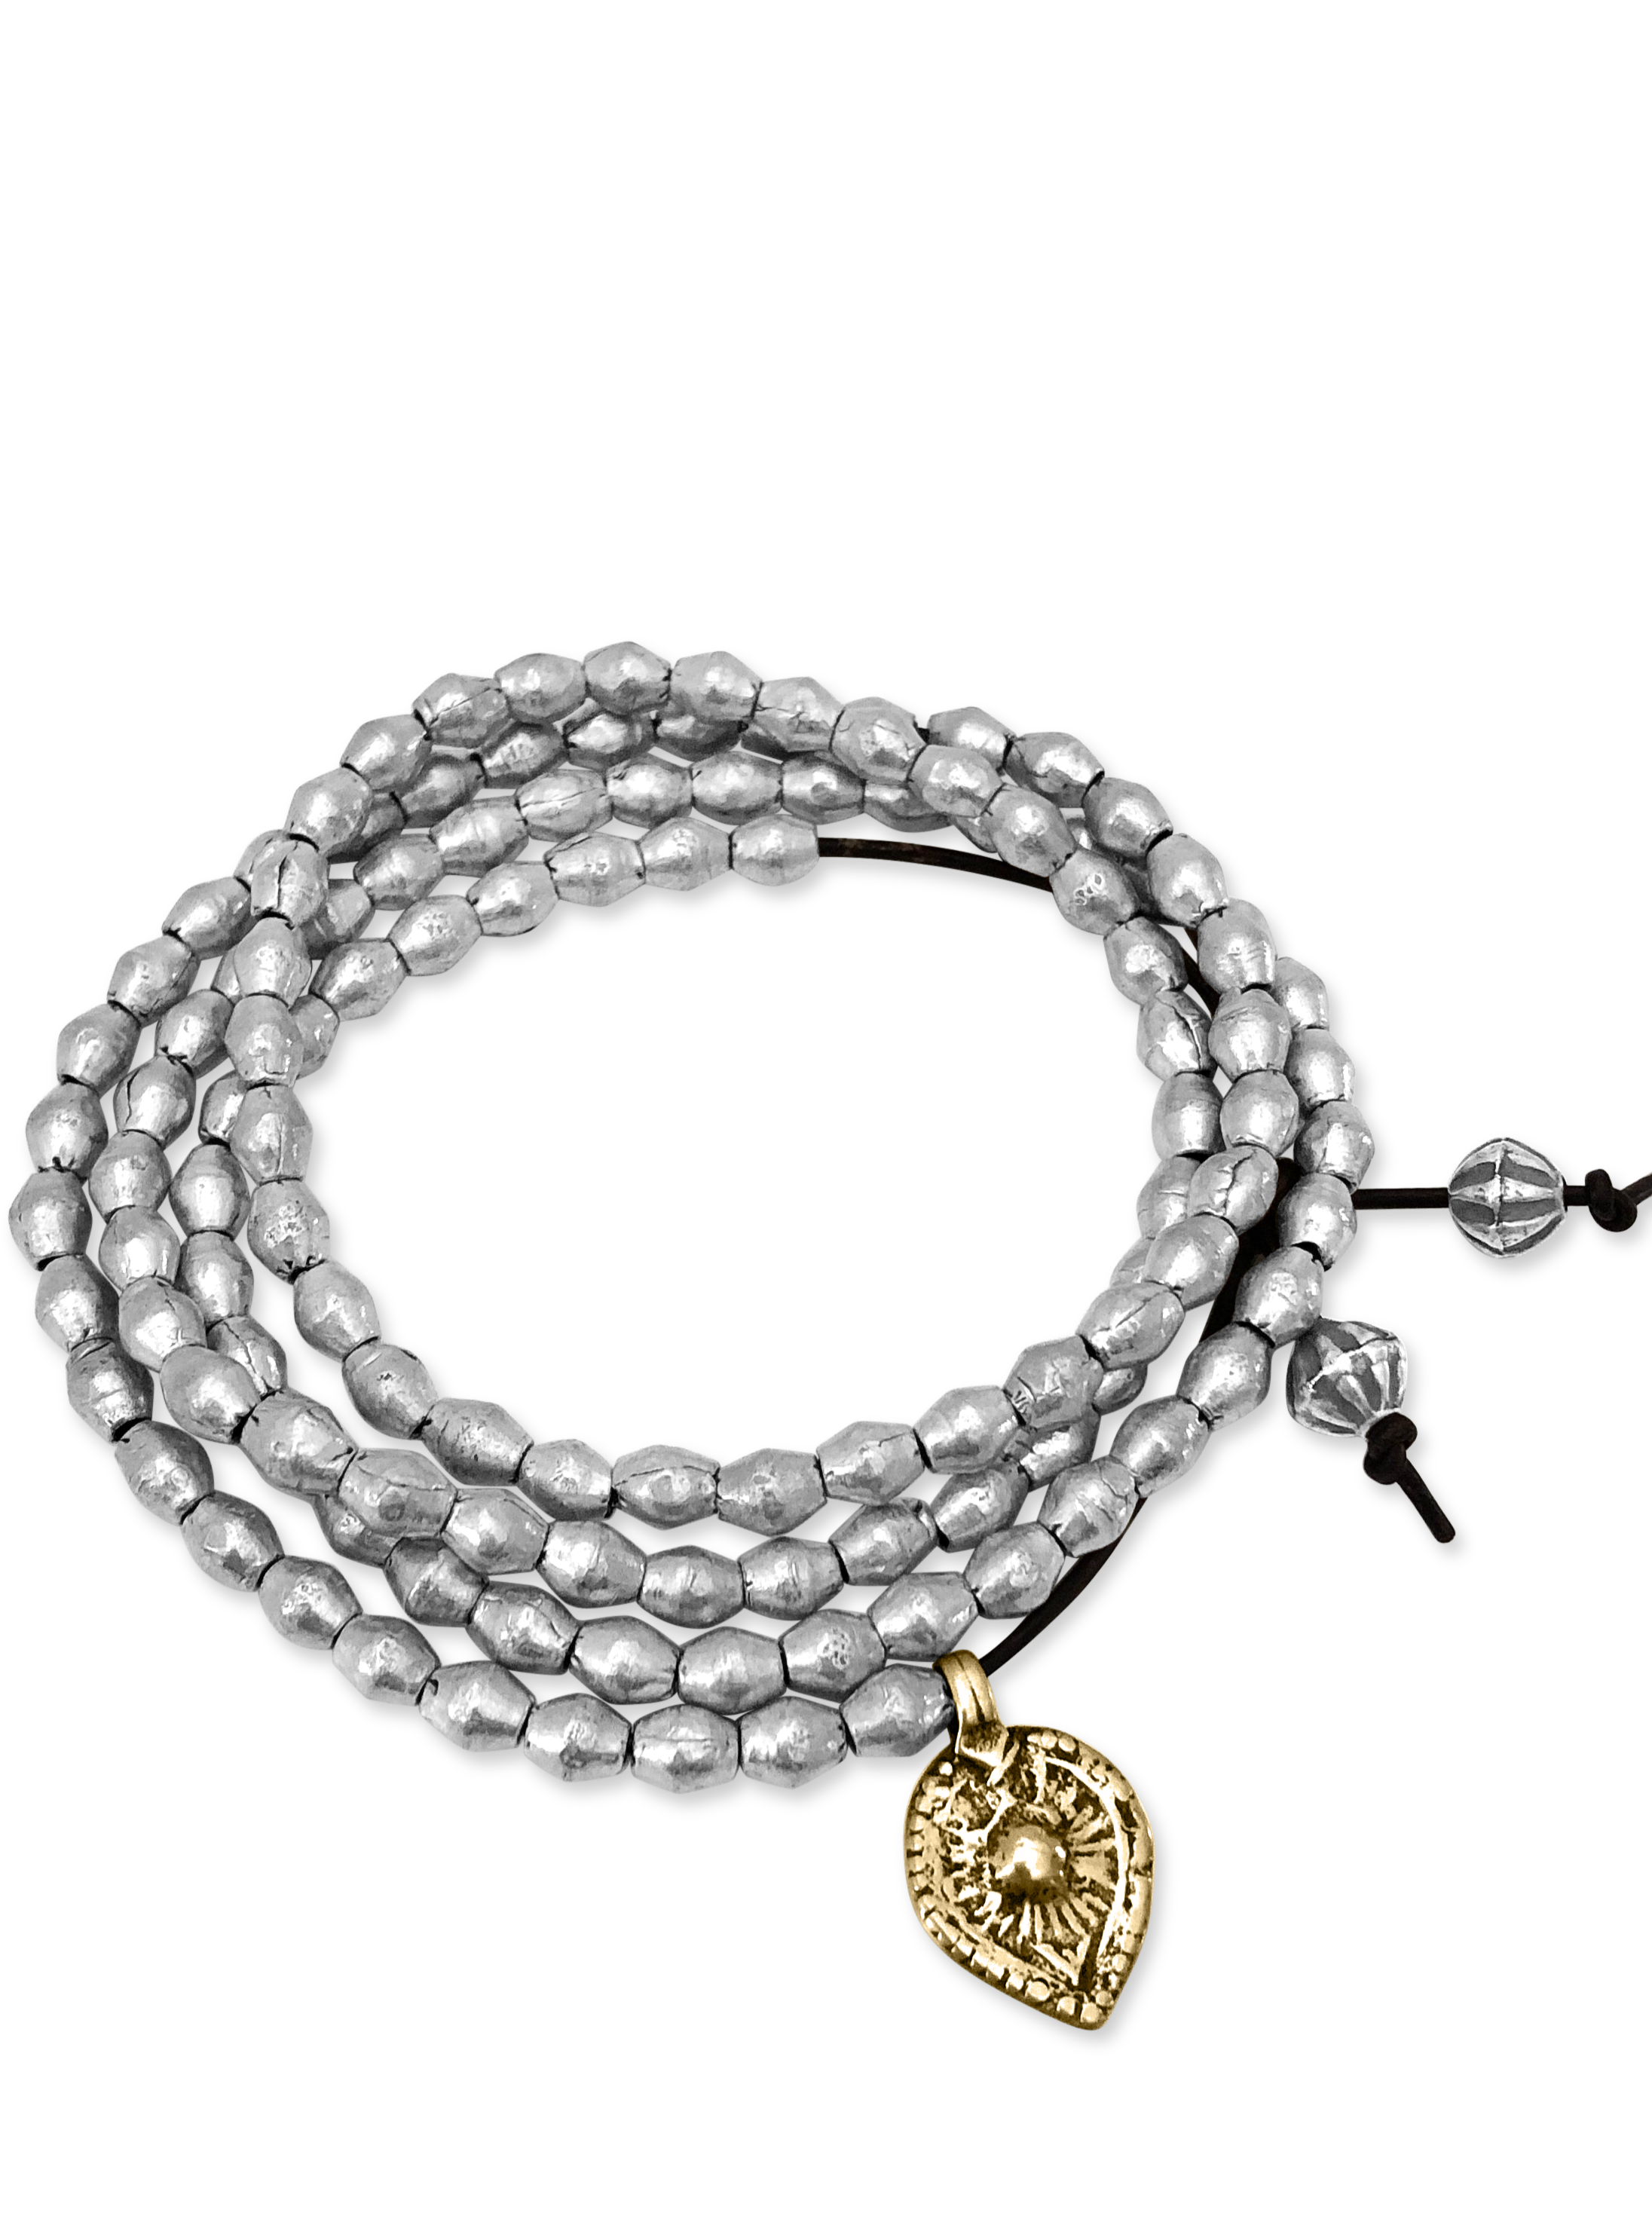 Silver African Trade Bead Wrap Bracelet